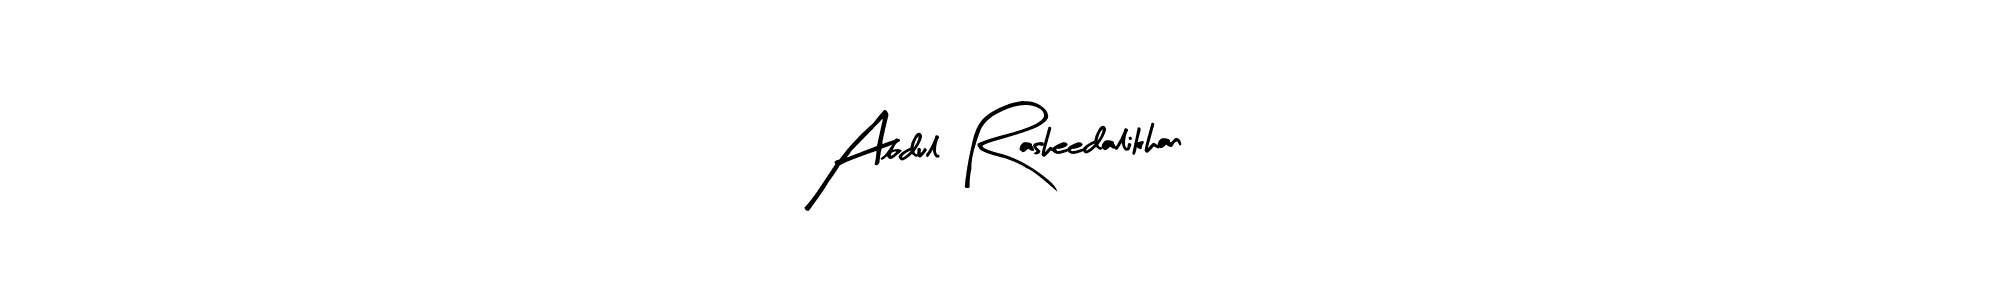 How to Draw Abdul Rasheedalikhan signature style? Arty Signature is a latest design signature styles for name Abdul Rasheedalikhan. Abdul Rasheedalikhan signature style 8 images and pictures png